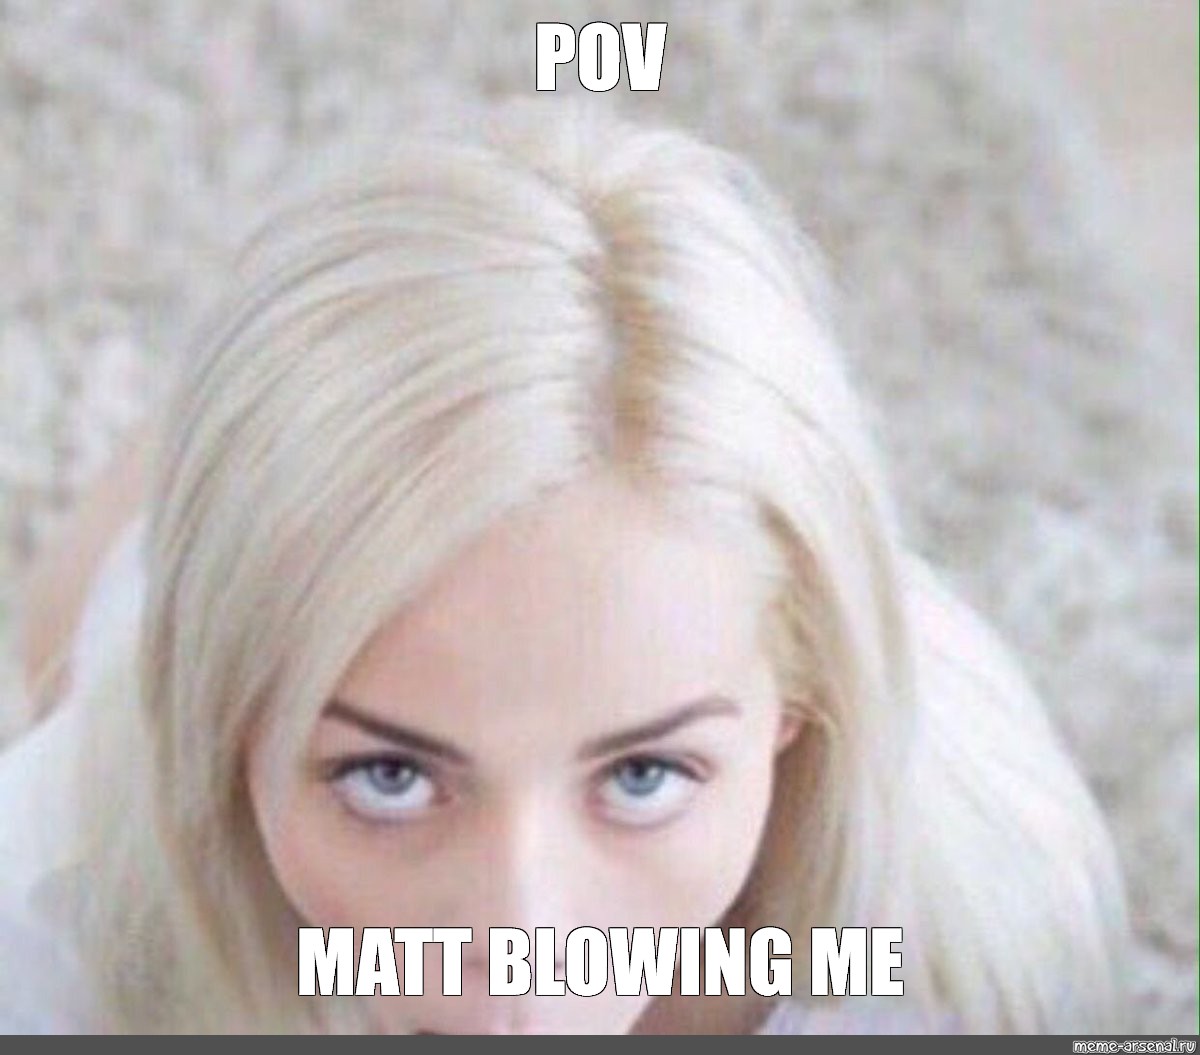 Meme "POV MATT BLOWING ME" All Templates